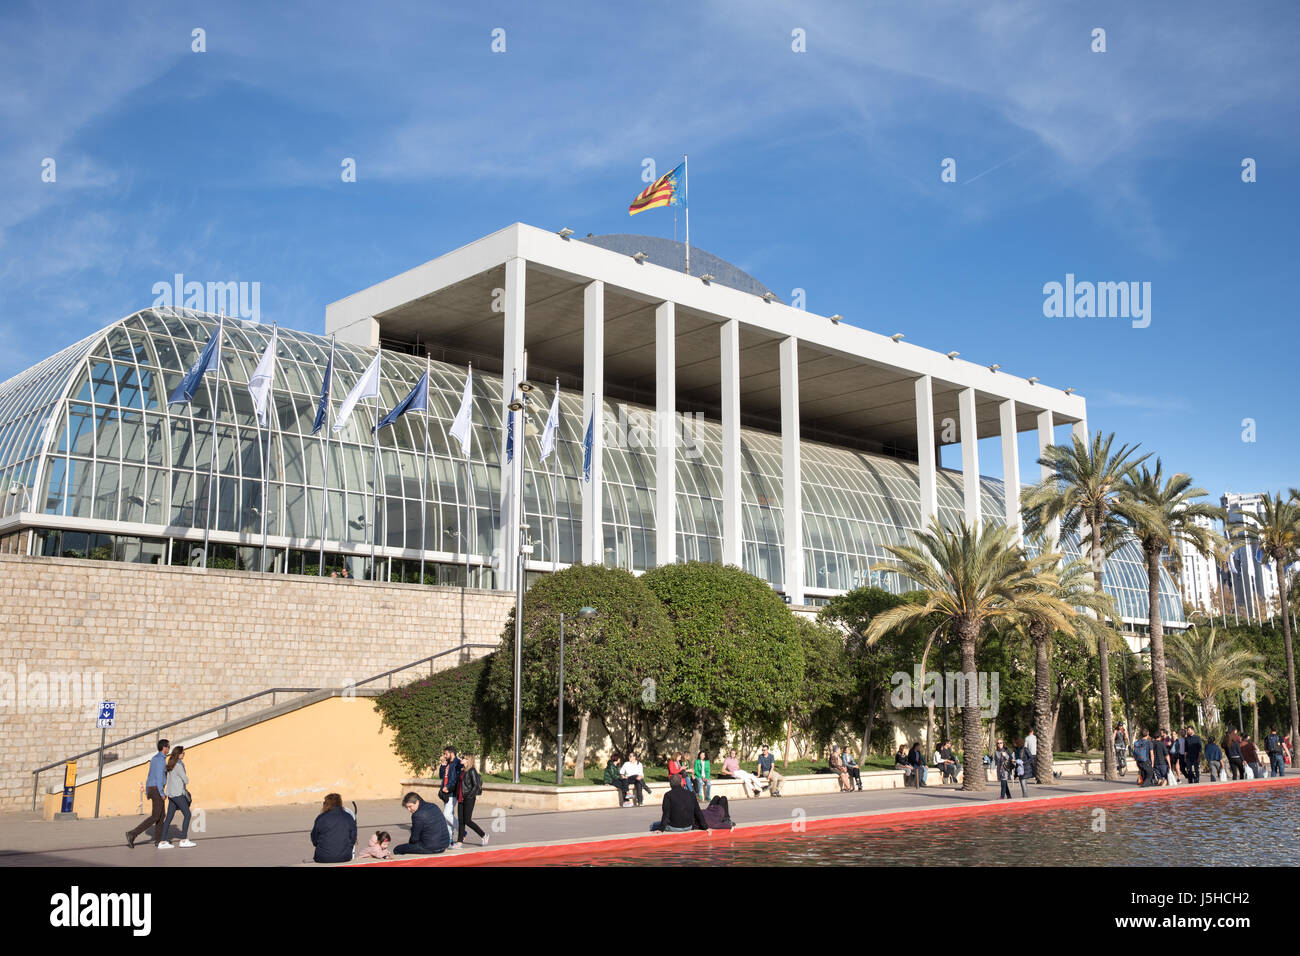 Der Palau De La Musica (Konzertsaal) Inder Turia-Gärten, in Valencia, Spanien Stockfoto